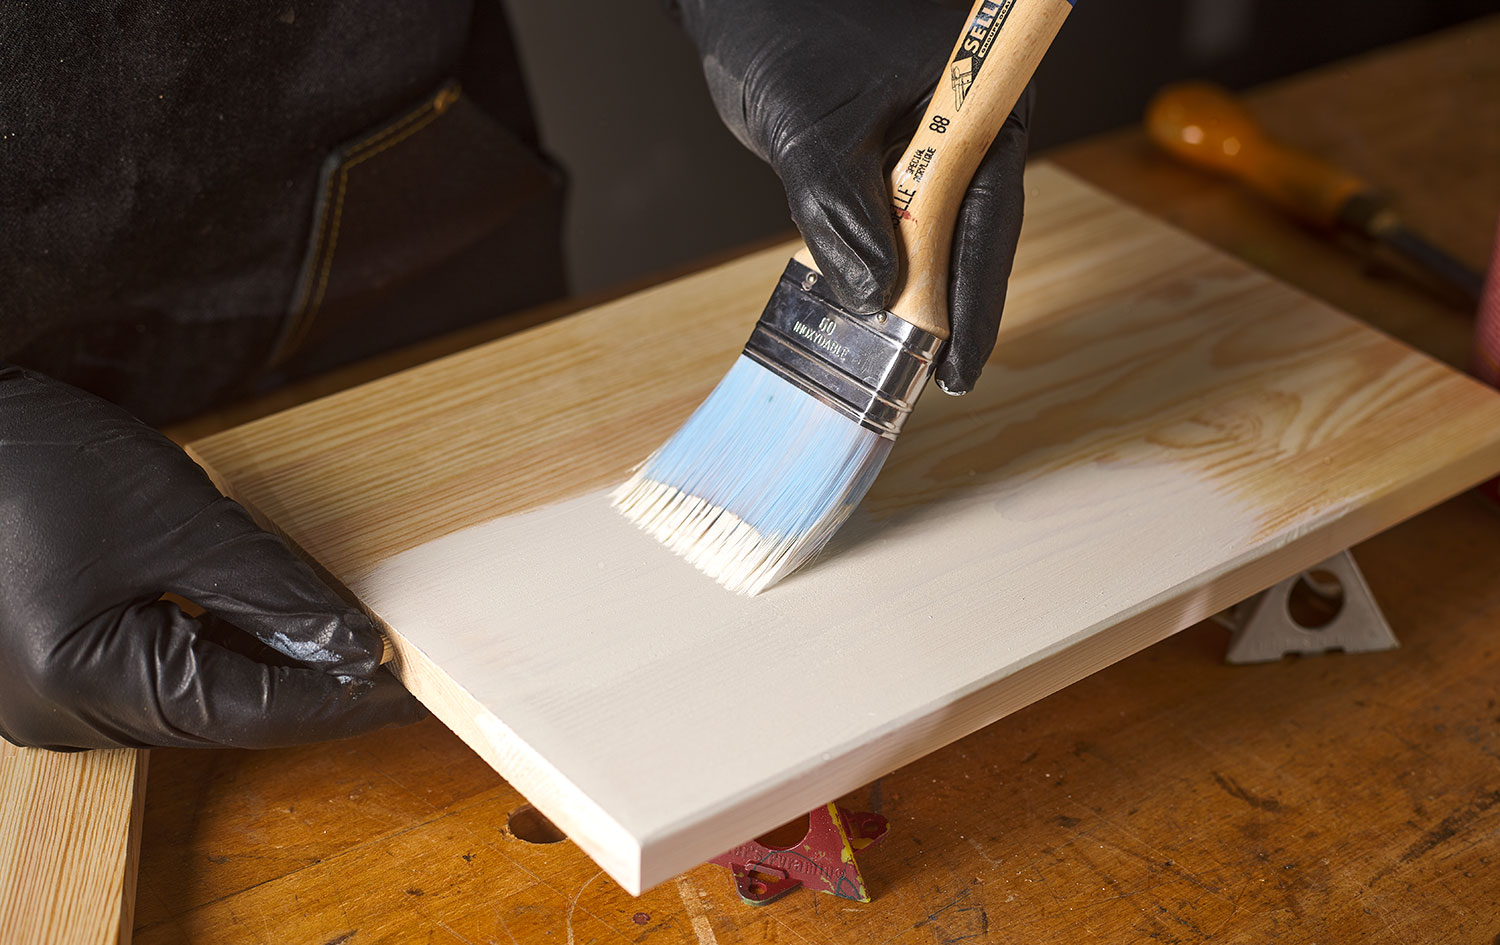 Applying General milk paint to raw wood